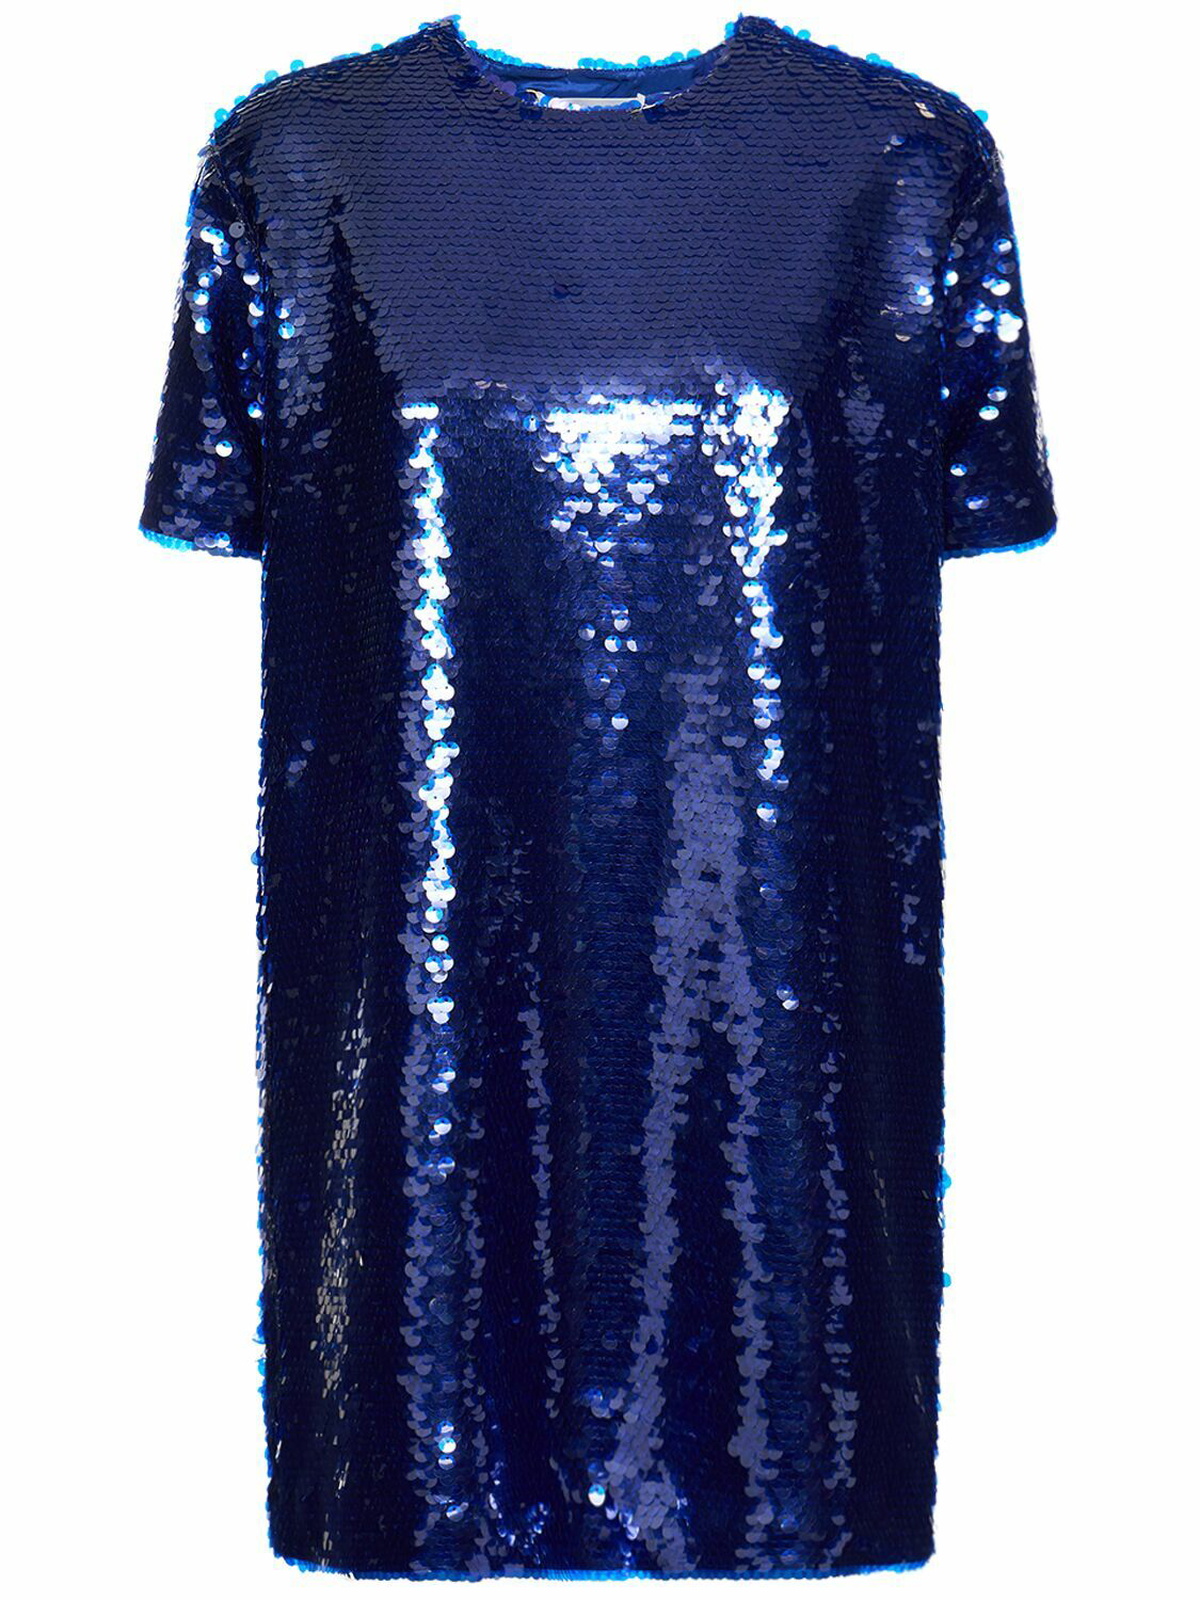 THE FRANKIE SHOP - Riley Embellished Mini Dress The Frankie Shop